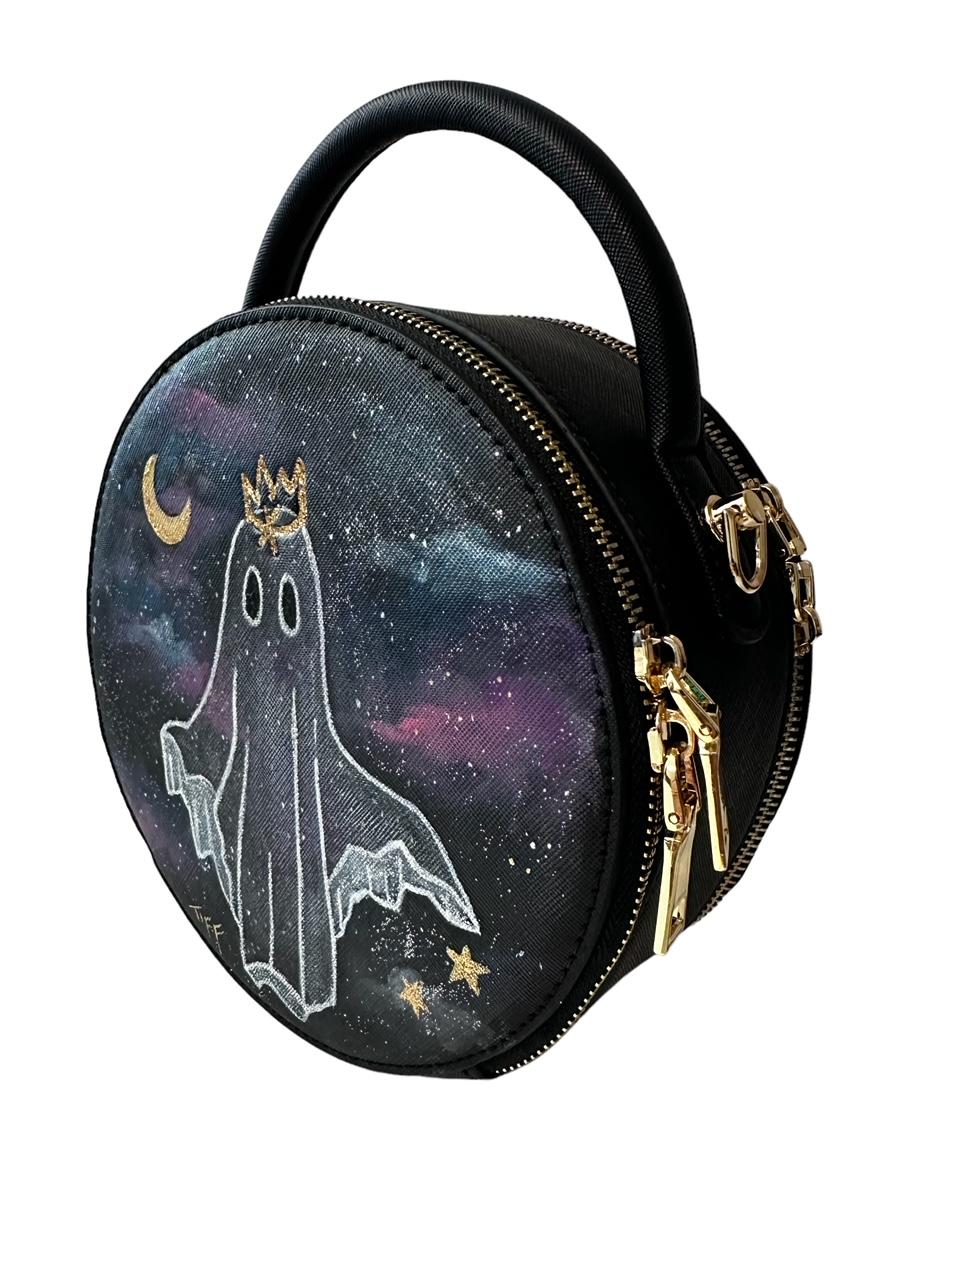 Galactic Ghost Bag